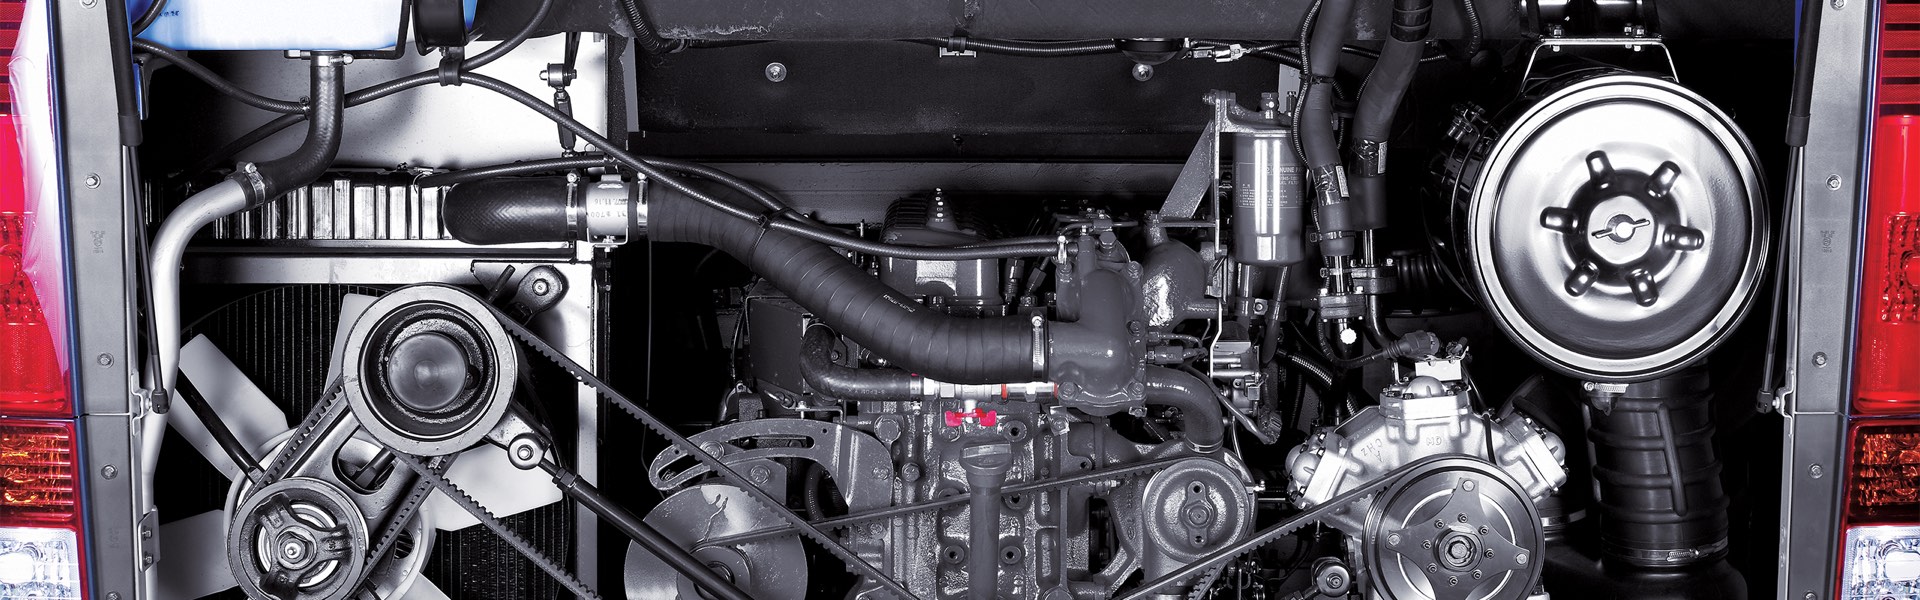 Engine Room Layout (Diesel Engine)